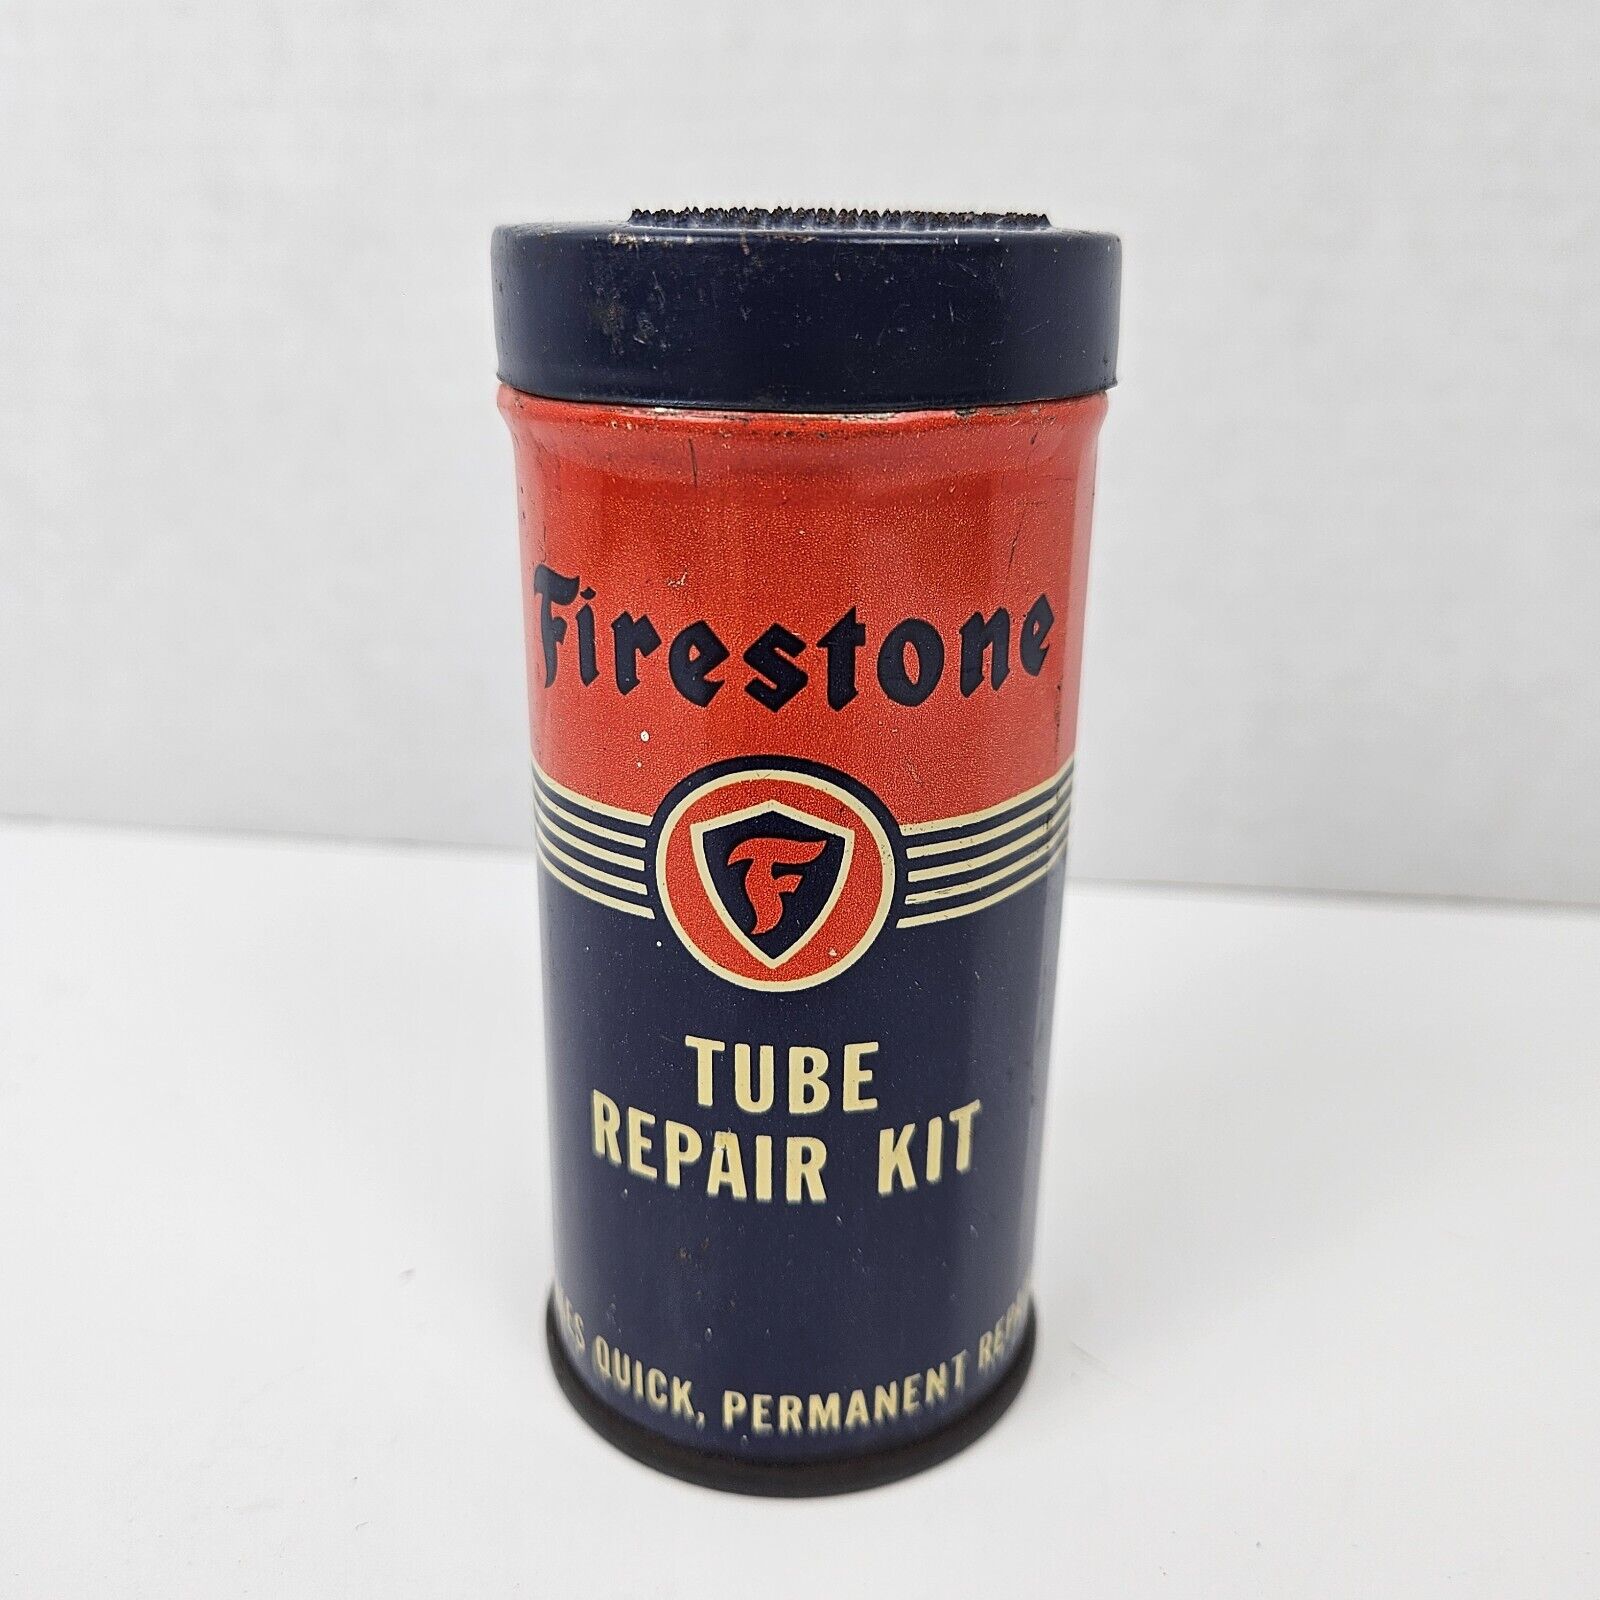 Vintage Large Firestone Tube Repair Kit Can